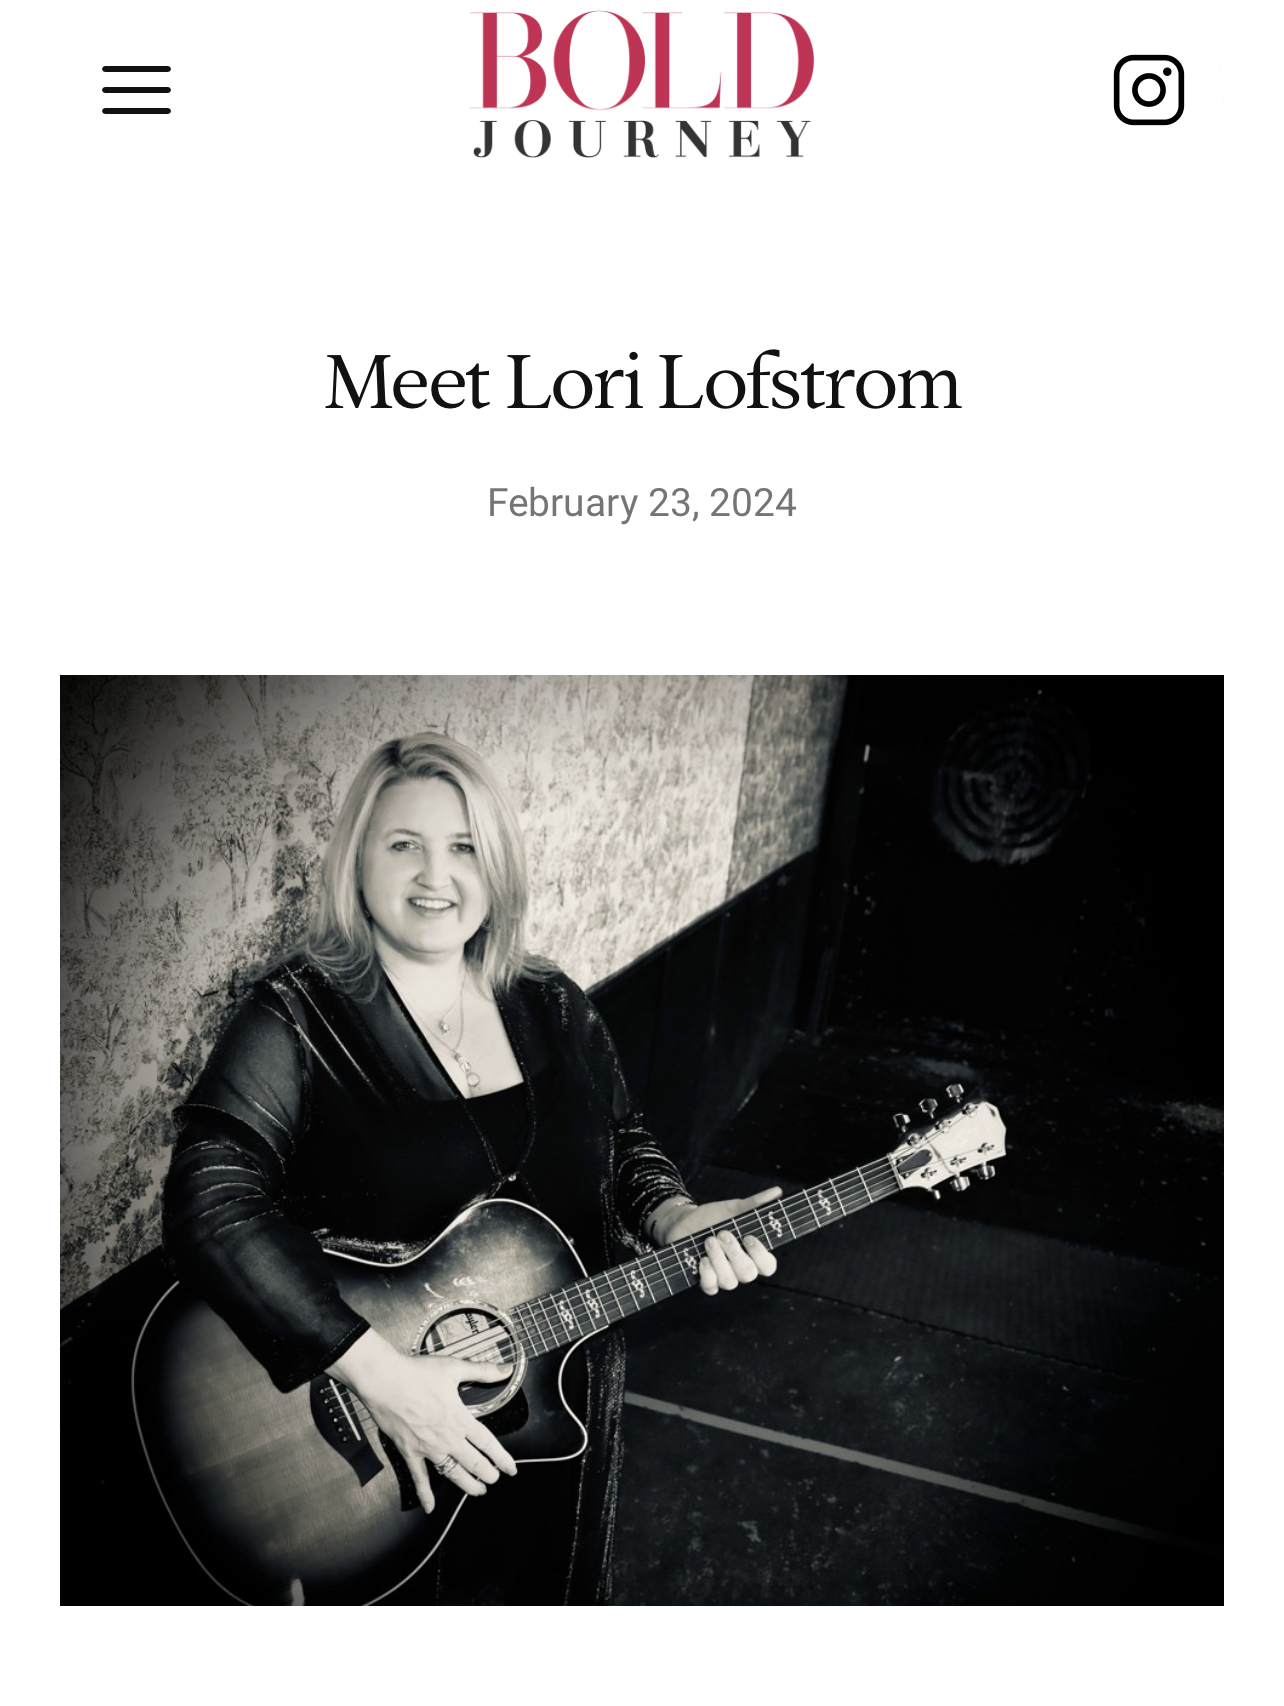 Meet Lori Lofstrom - Bold Journey